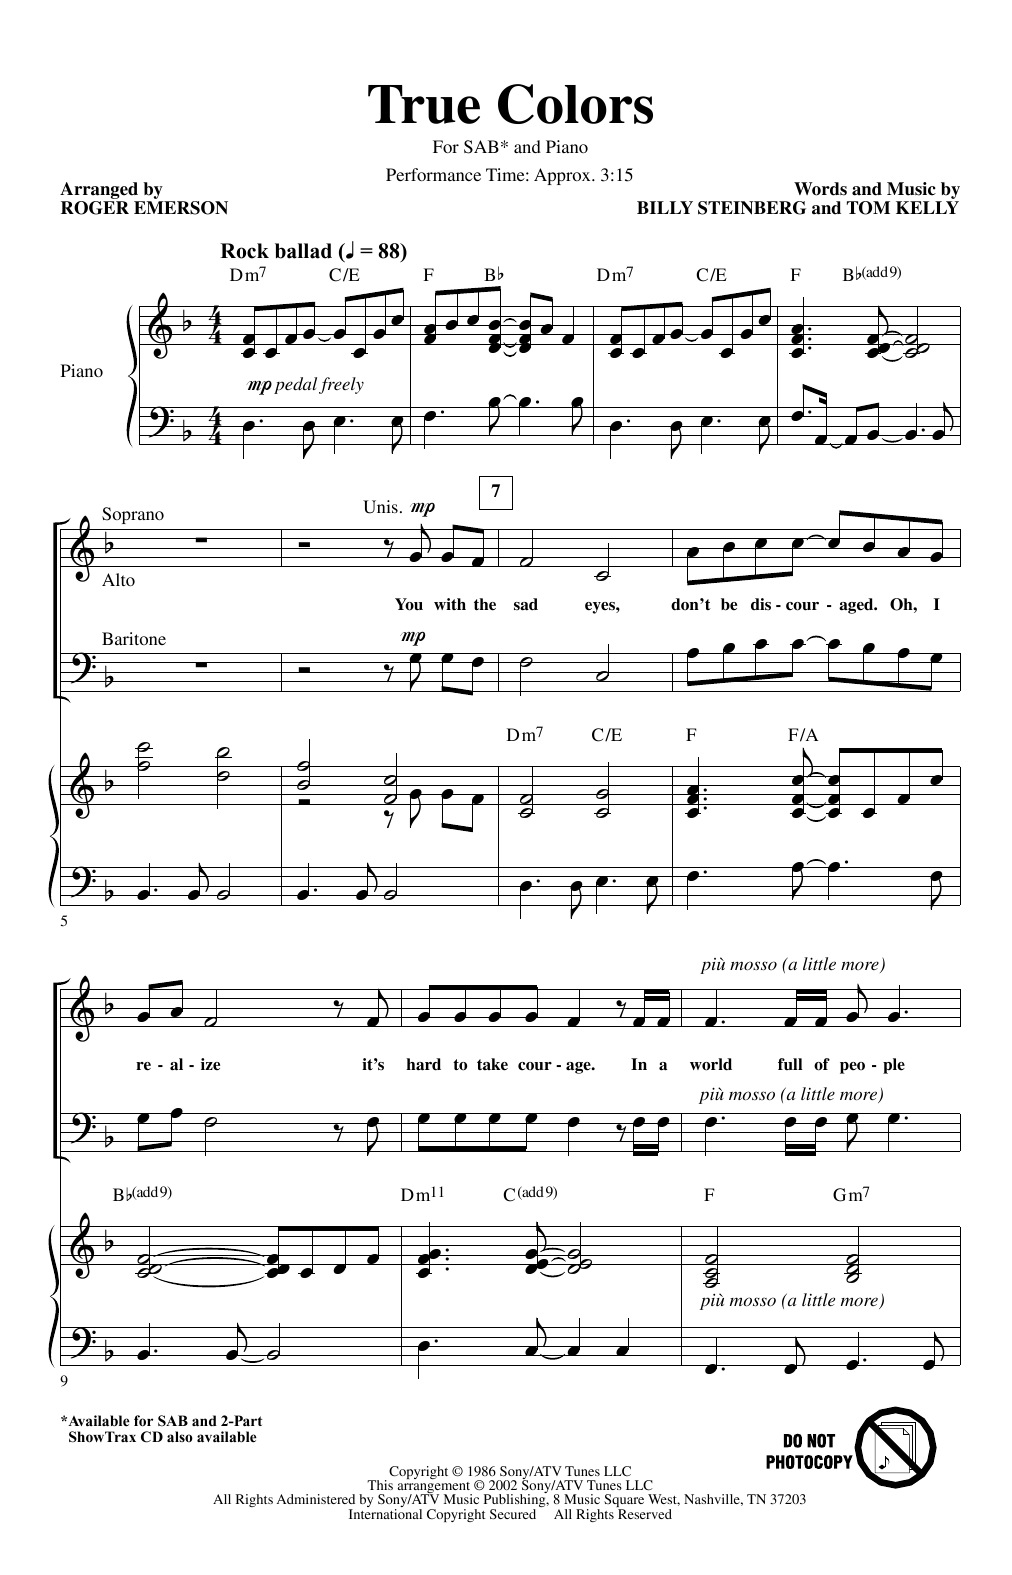 Cyndi Lauper True Colors (arr. Roger Emerson) Sheet Music Notes & Chords for SAB Choir - Download or Print PDF